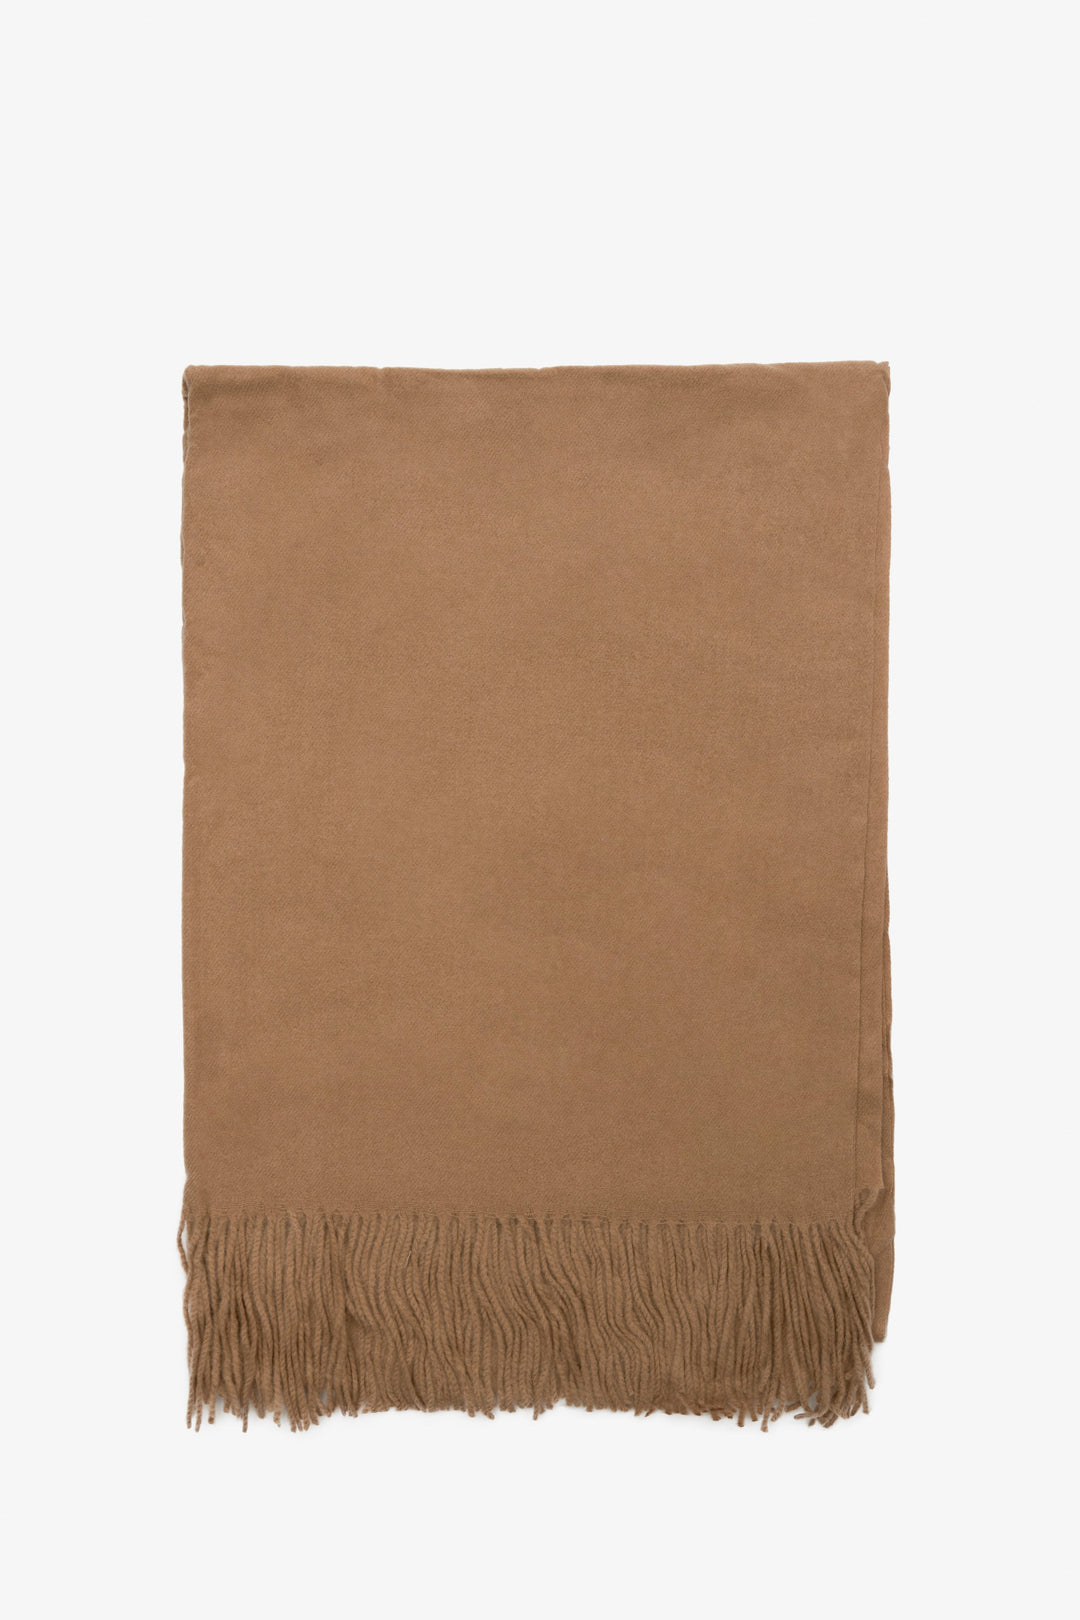 Women's brown scarf by Estro.